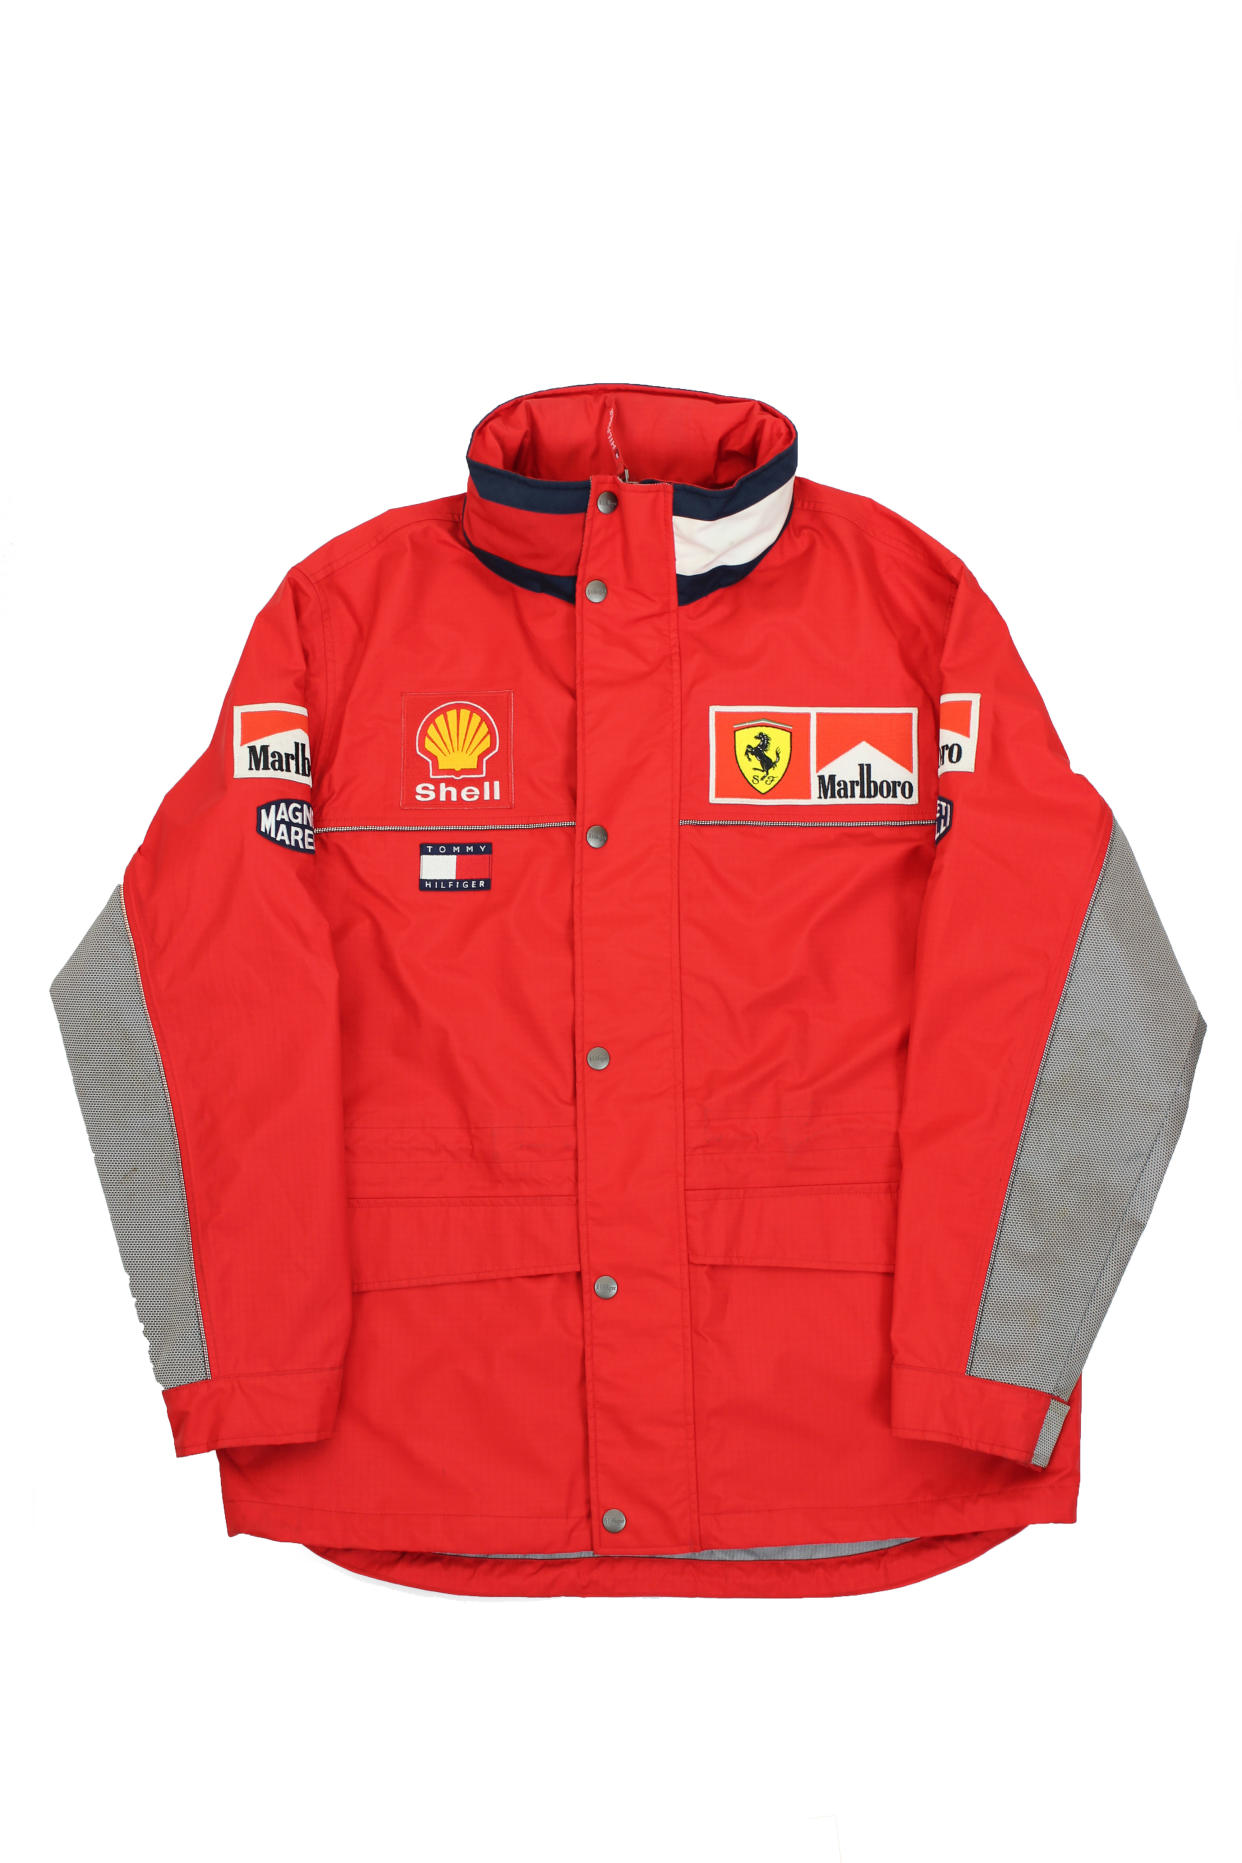 Michael Schumacher’s signed Ferrari team issue racing jacket (Robert Malone/PA)